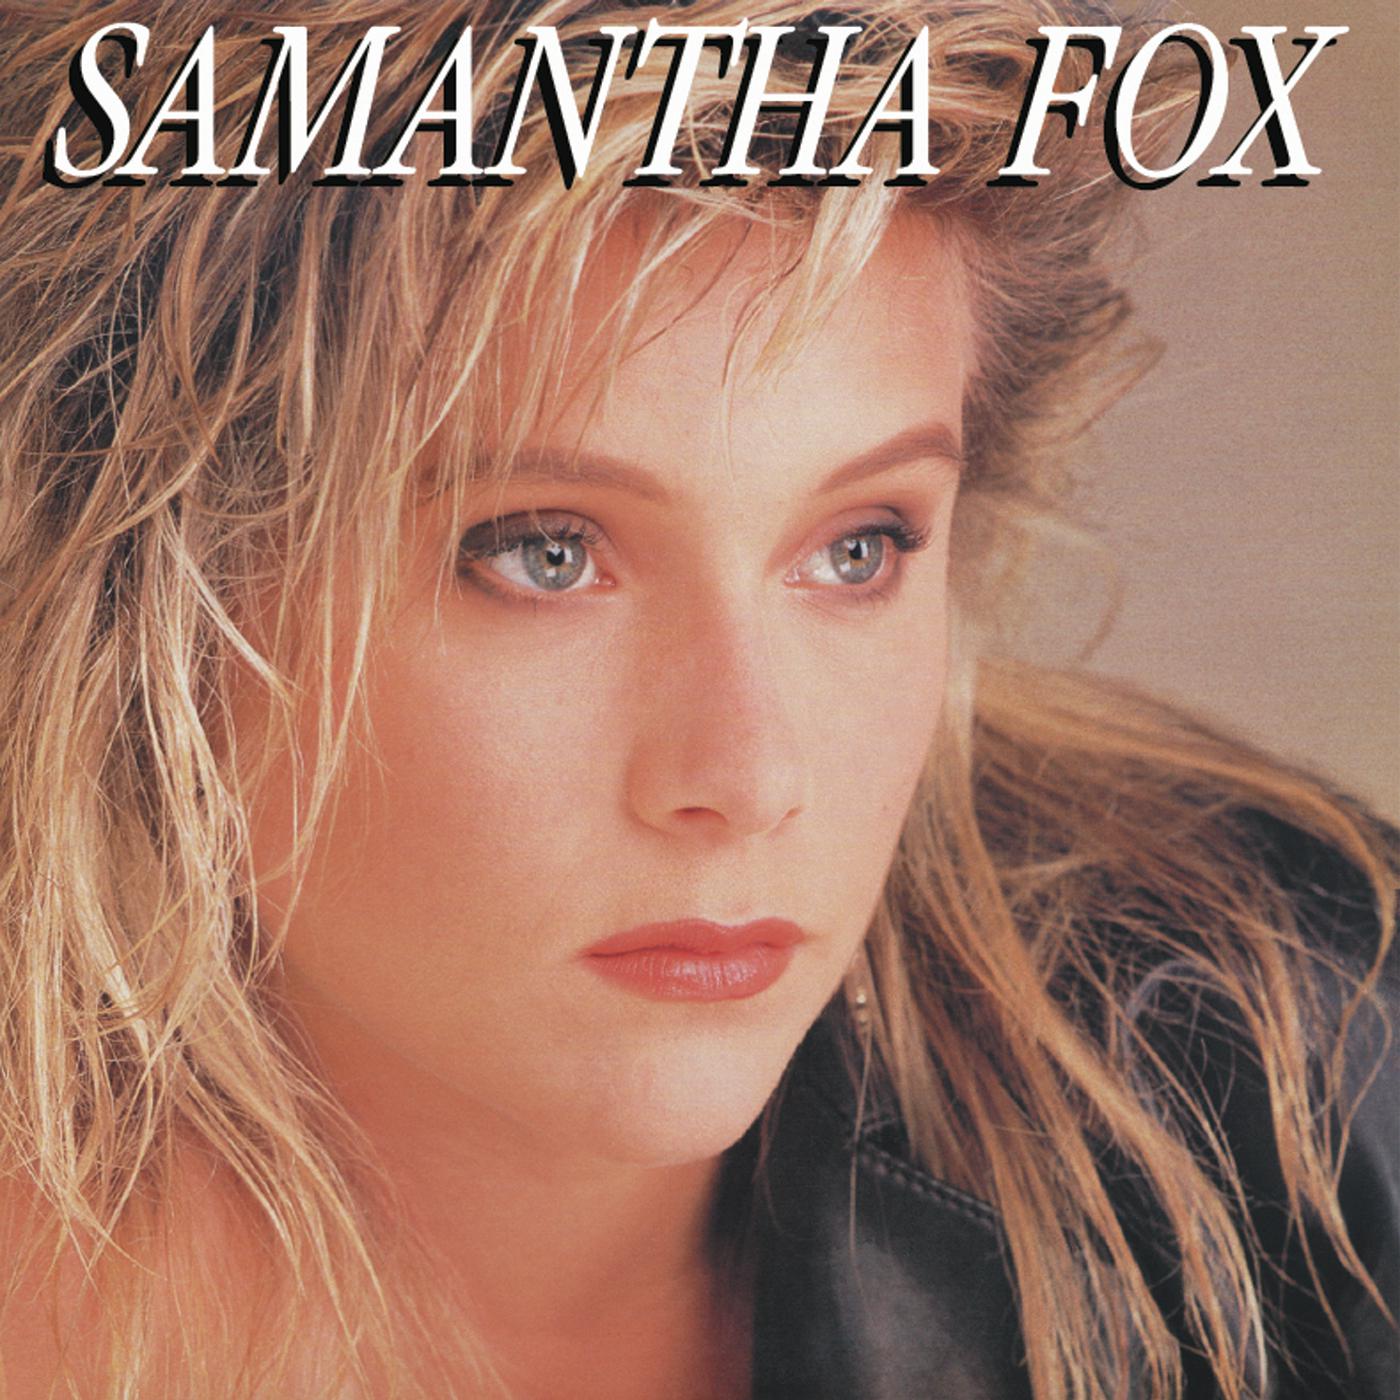 Samantha Fox - (I Can't Get No) Satisfaction (Radio Mix)